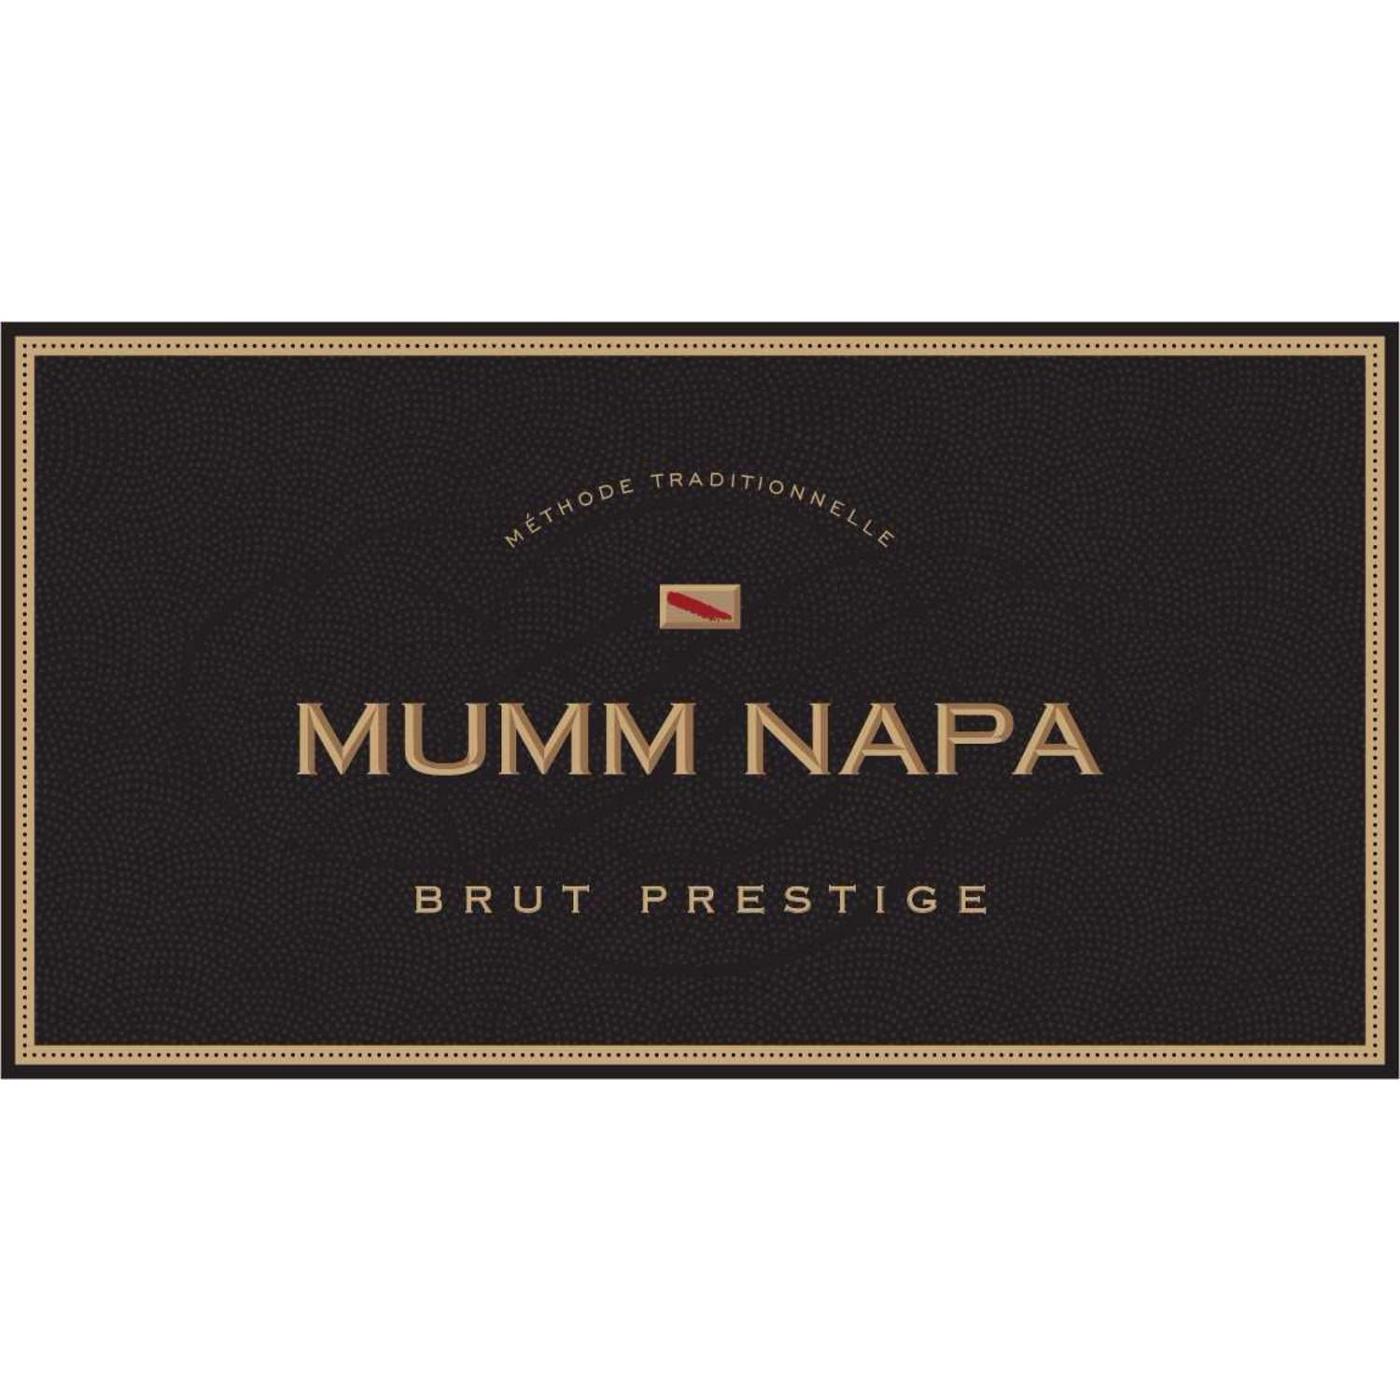 Mumm Napa Brut Prestige Sparkling Wine; image 4 of 4